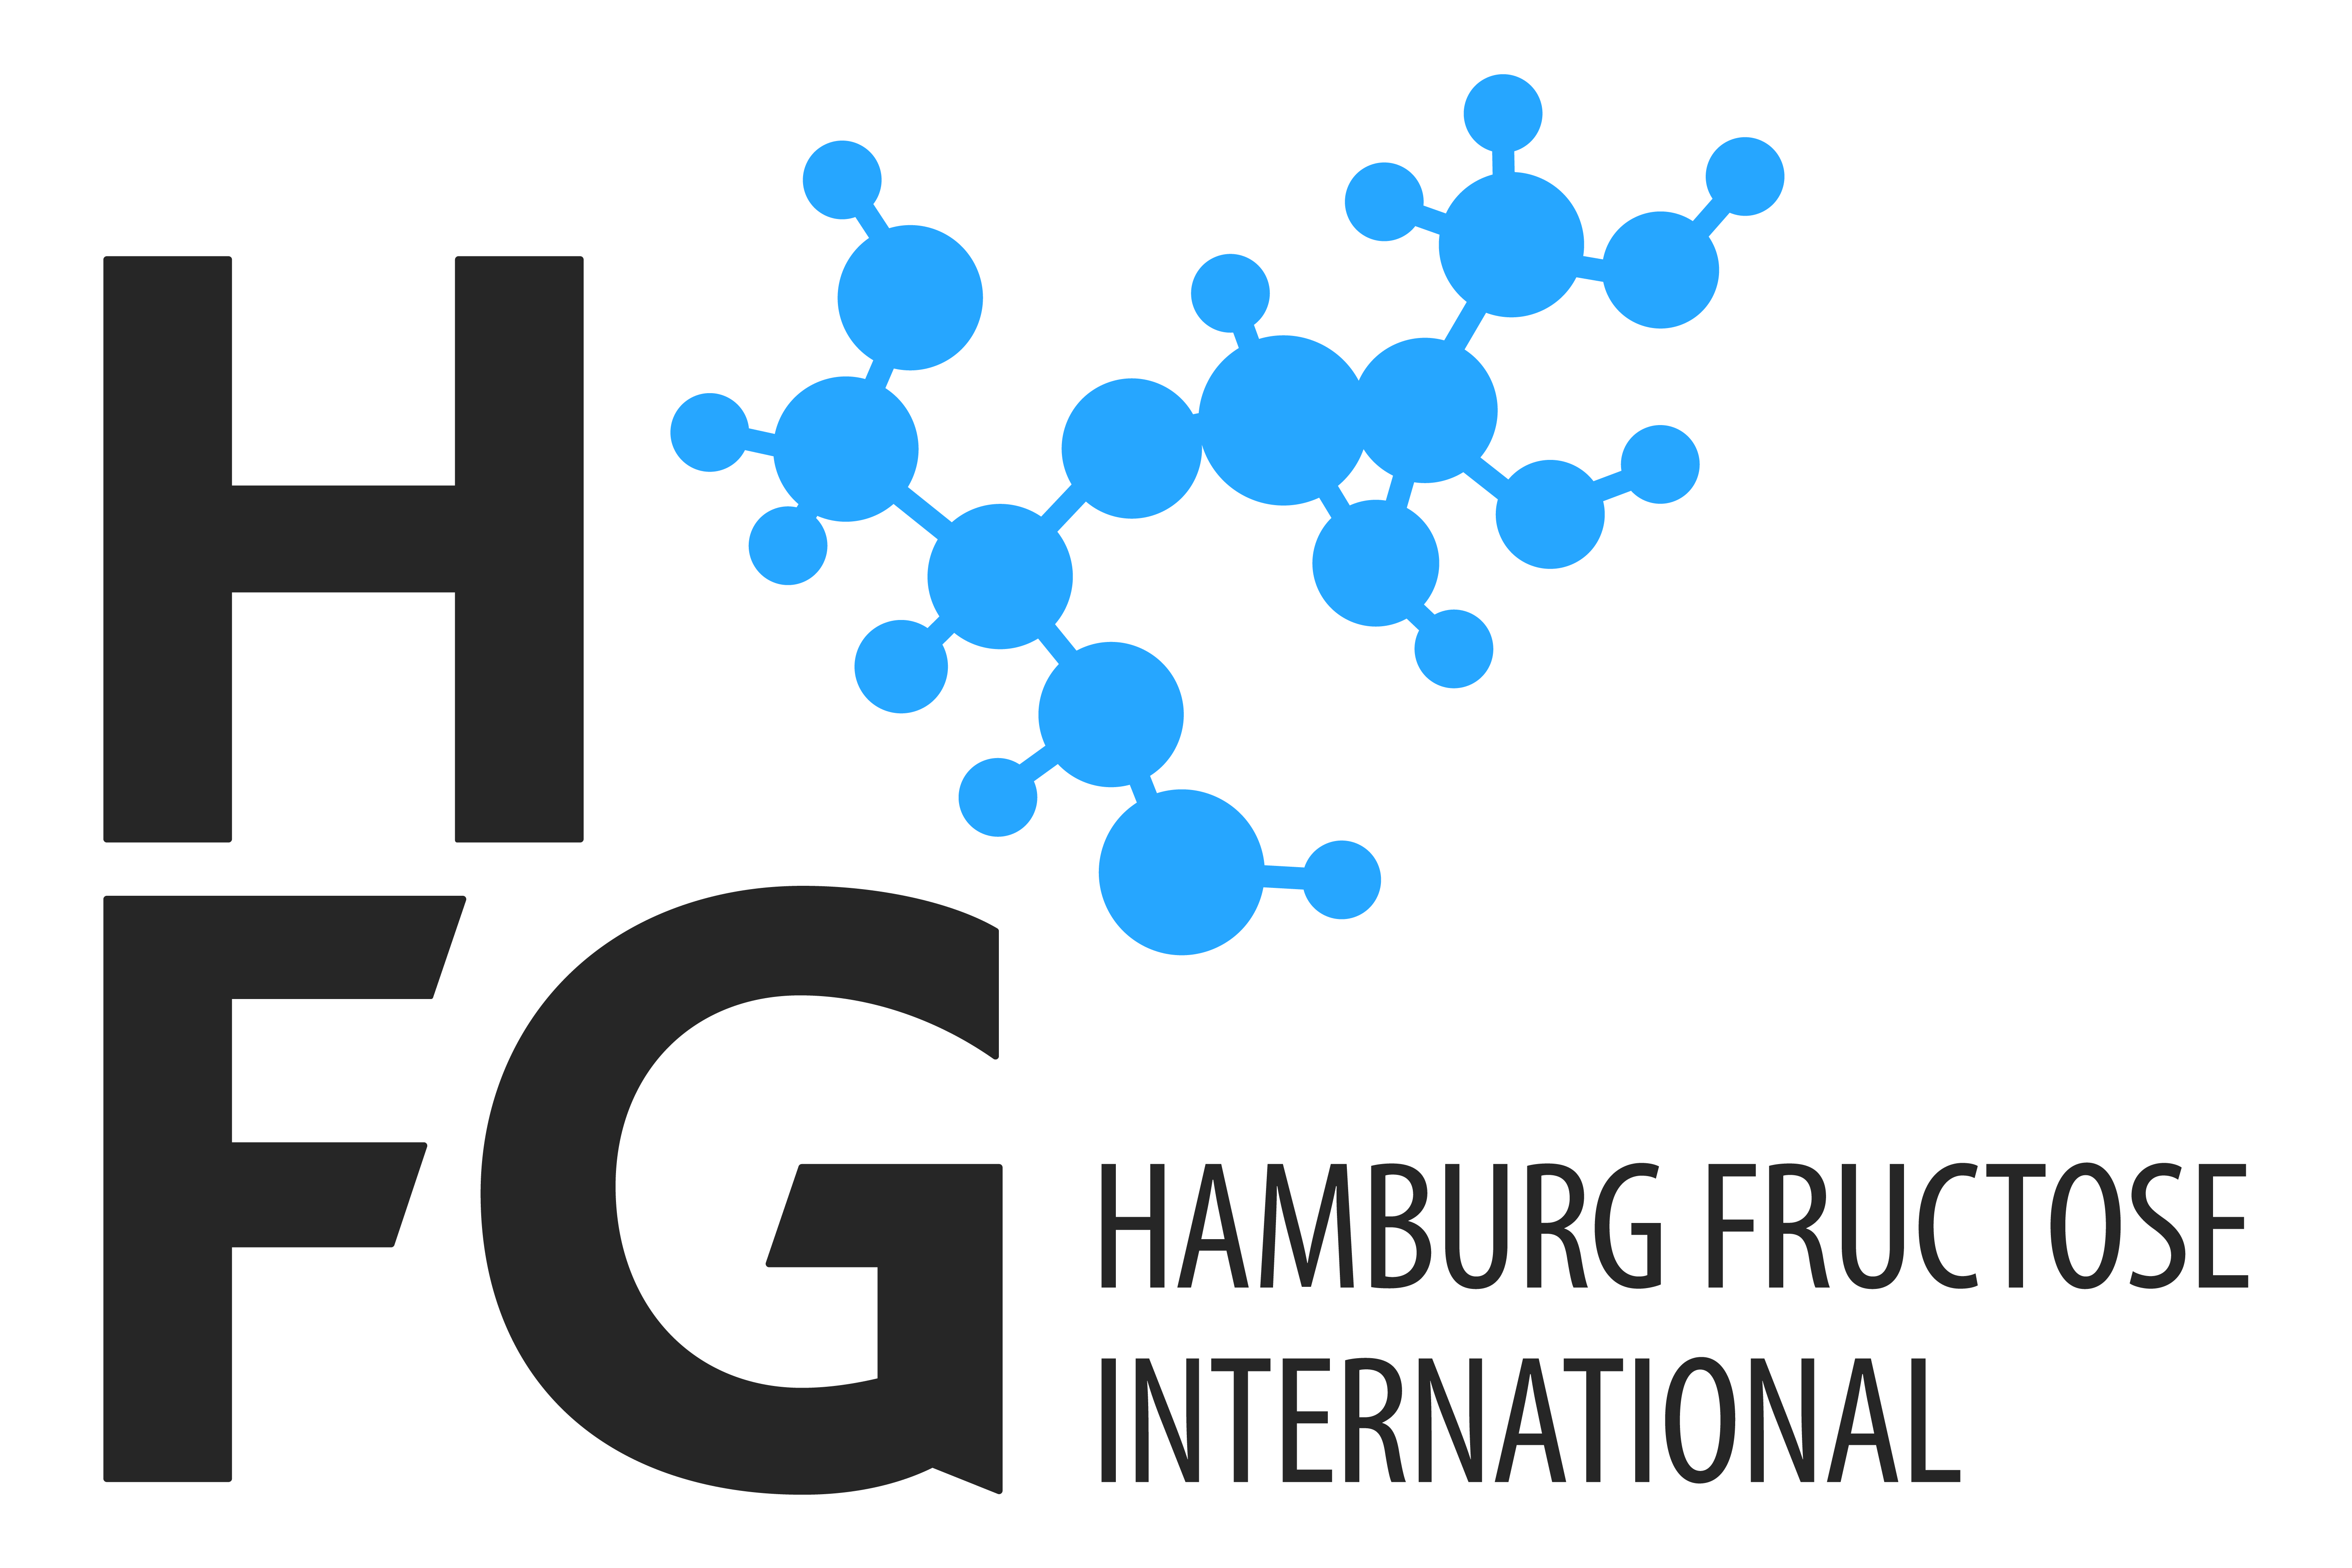 Hamburg Fructose GmbH International